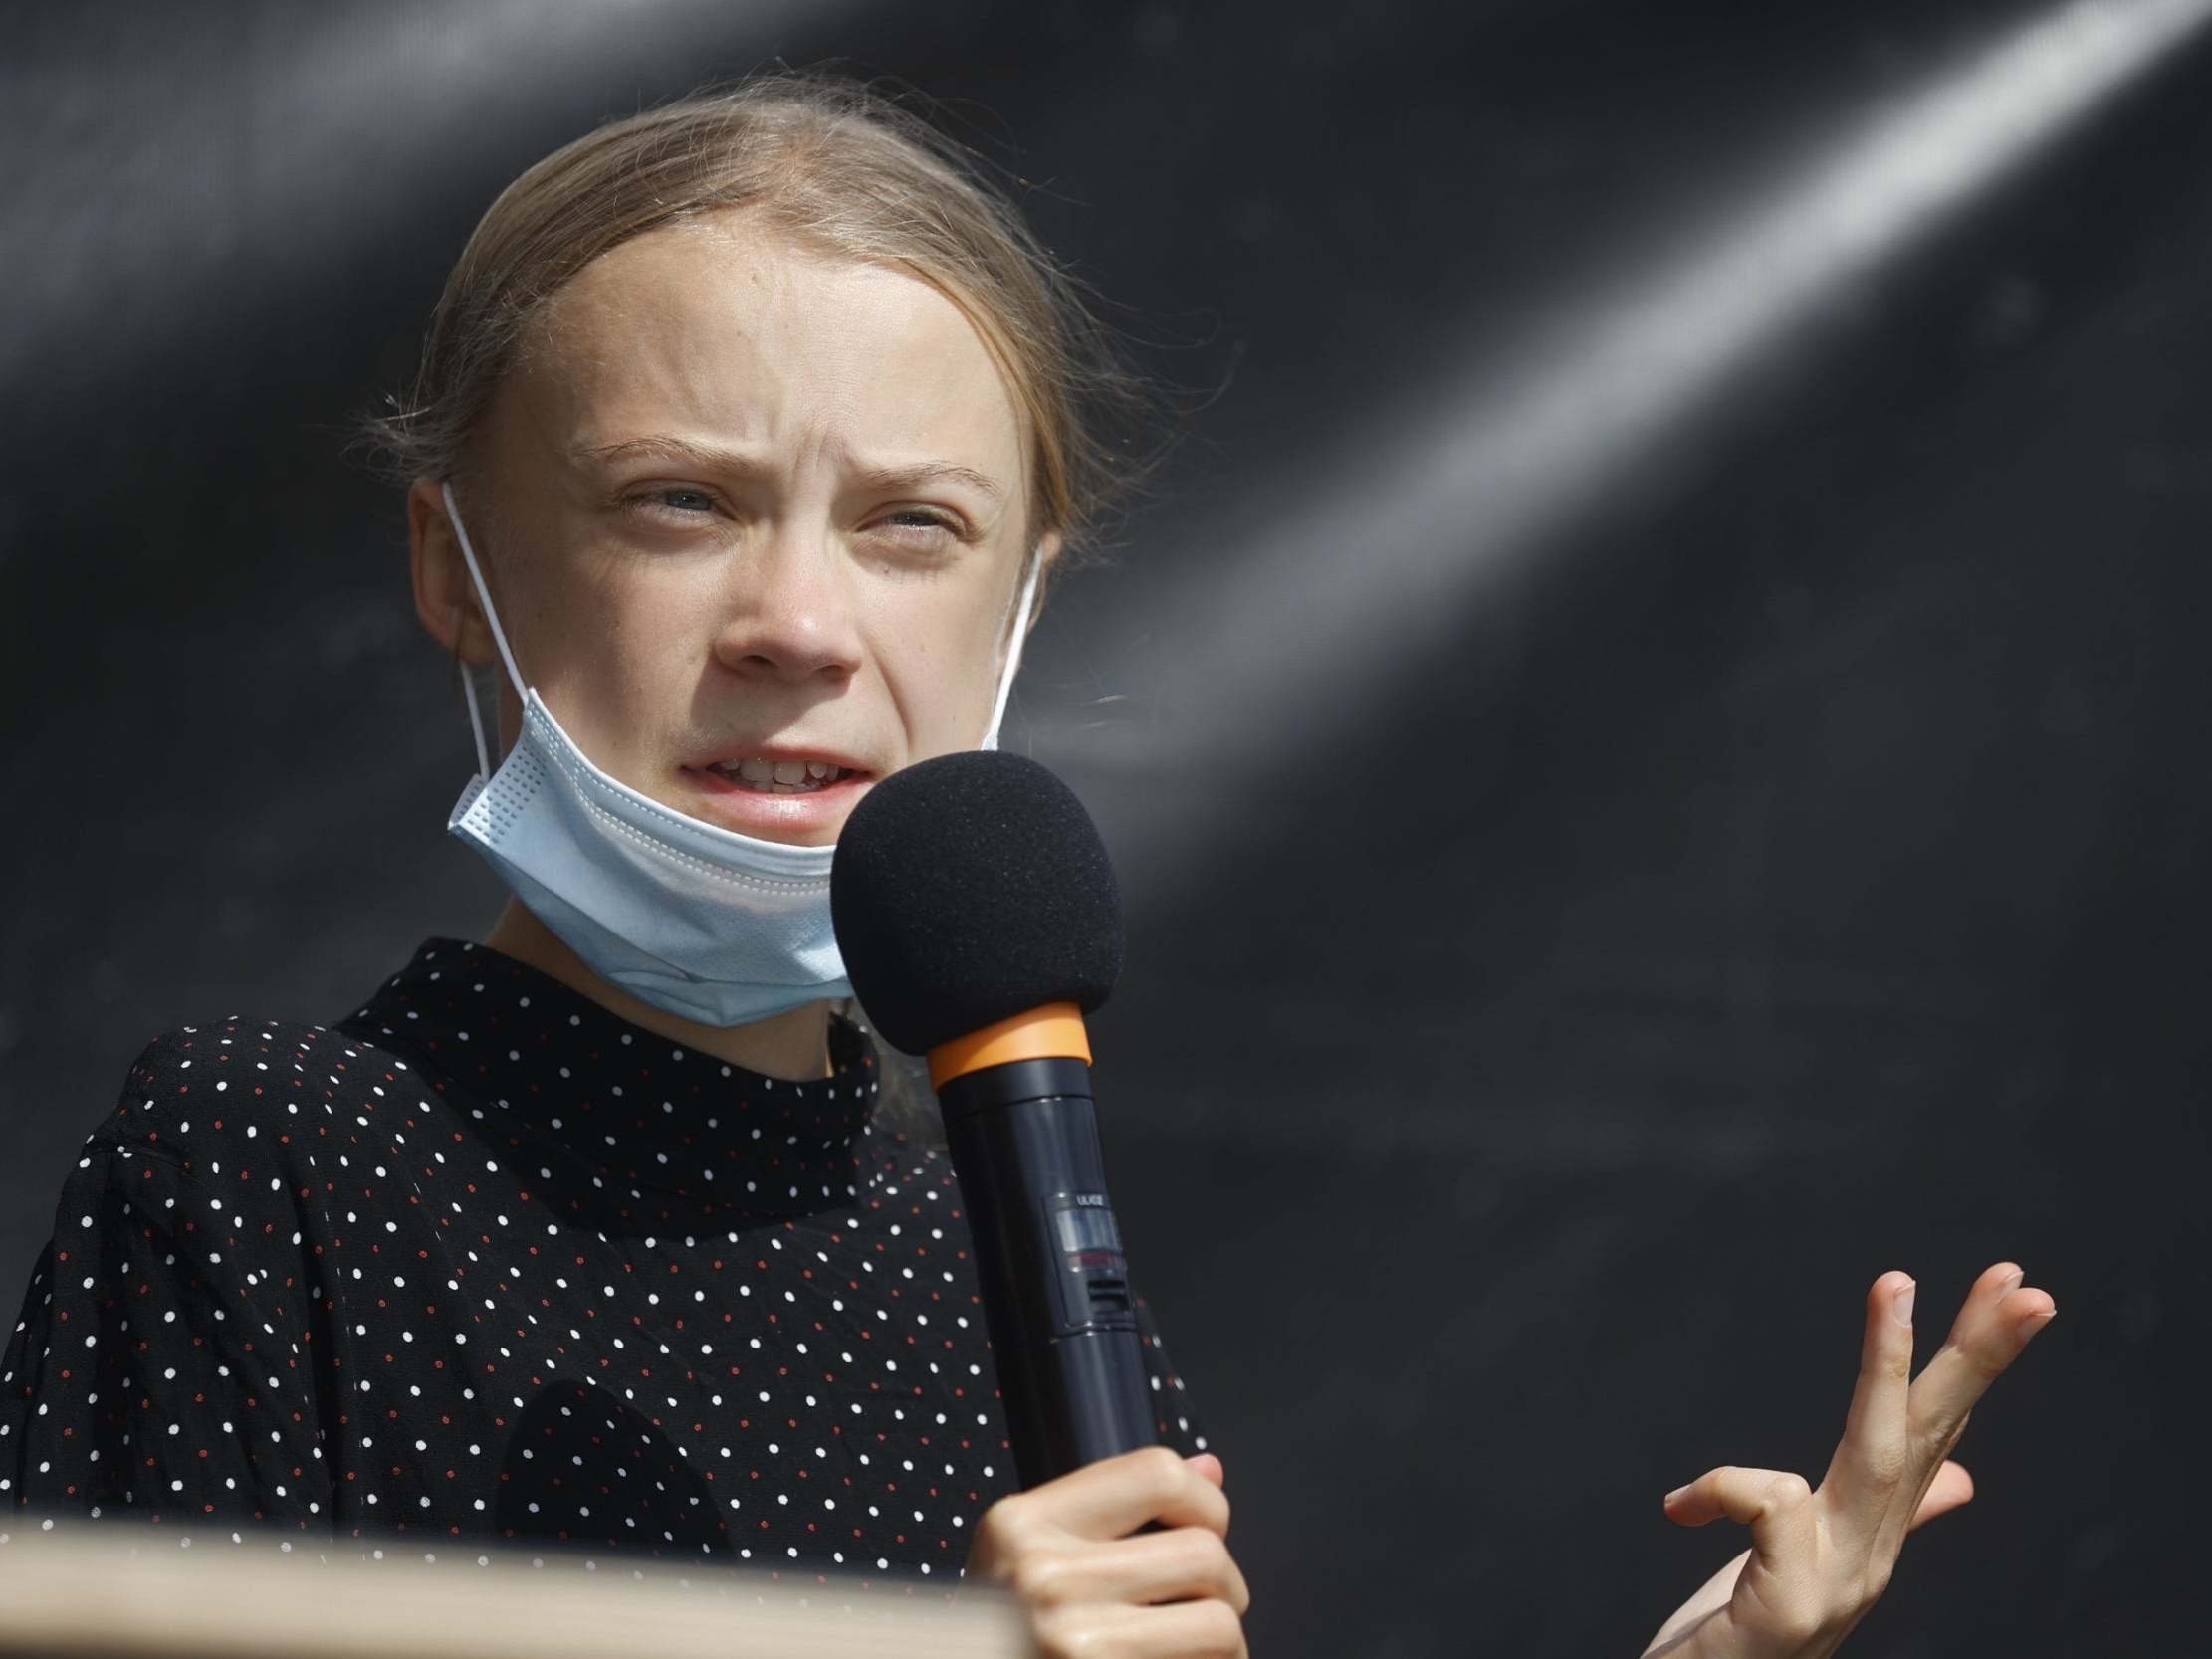 Greta Thunberg addresses an audience including German Chancellor Angela Merkel in Berlin on 20 August 2020